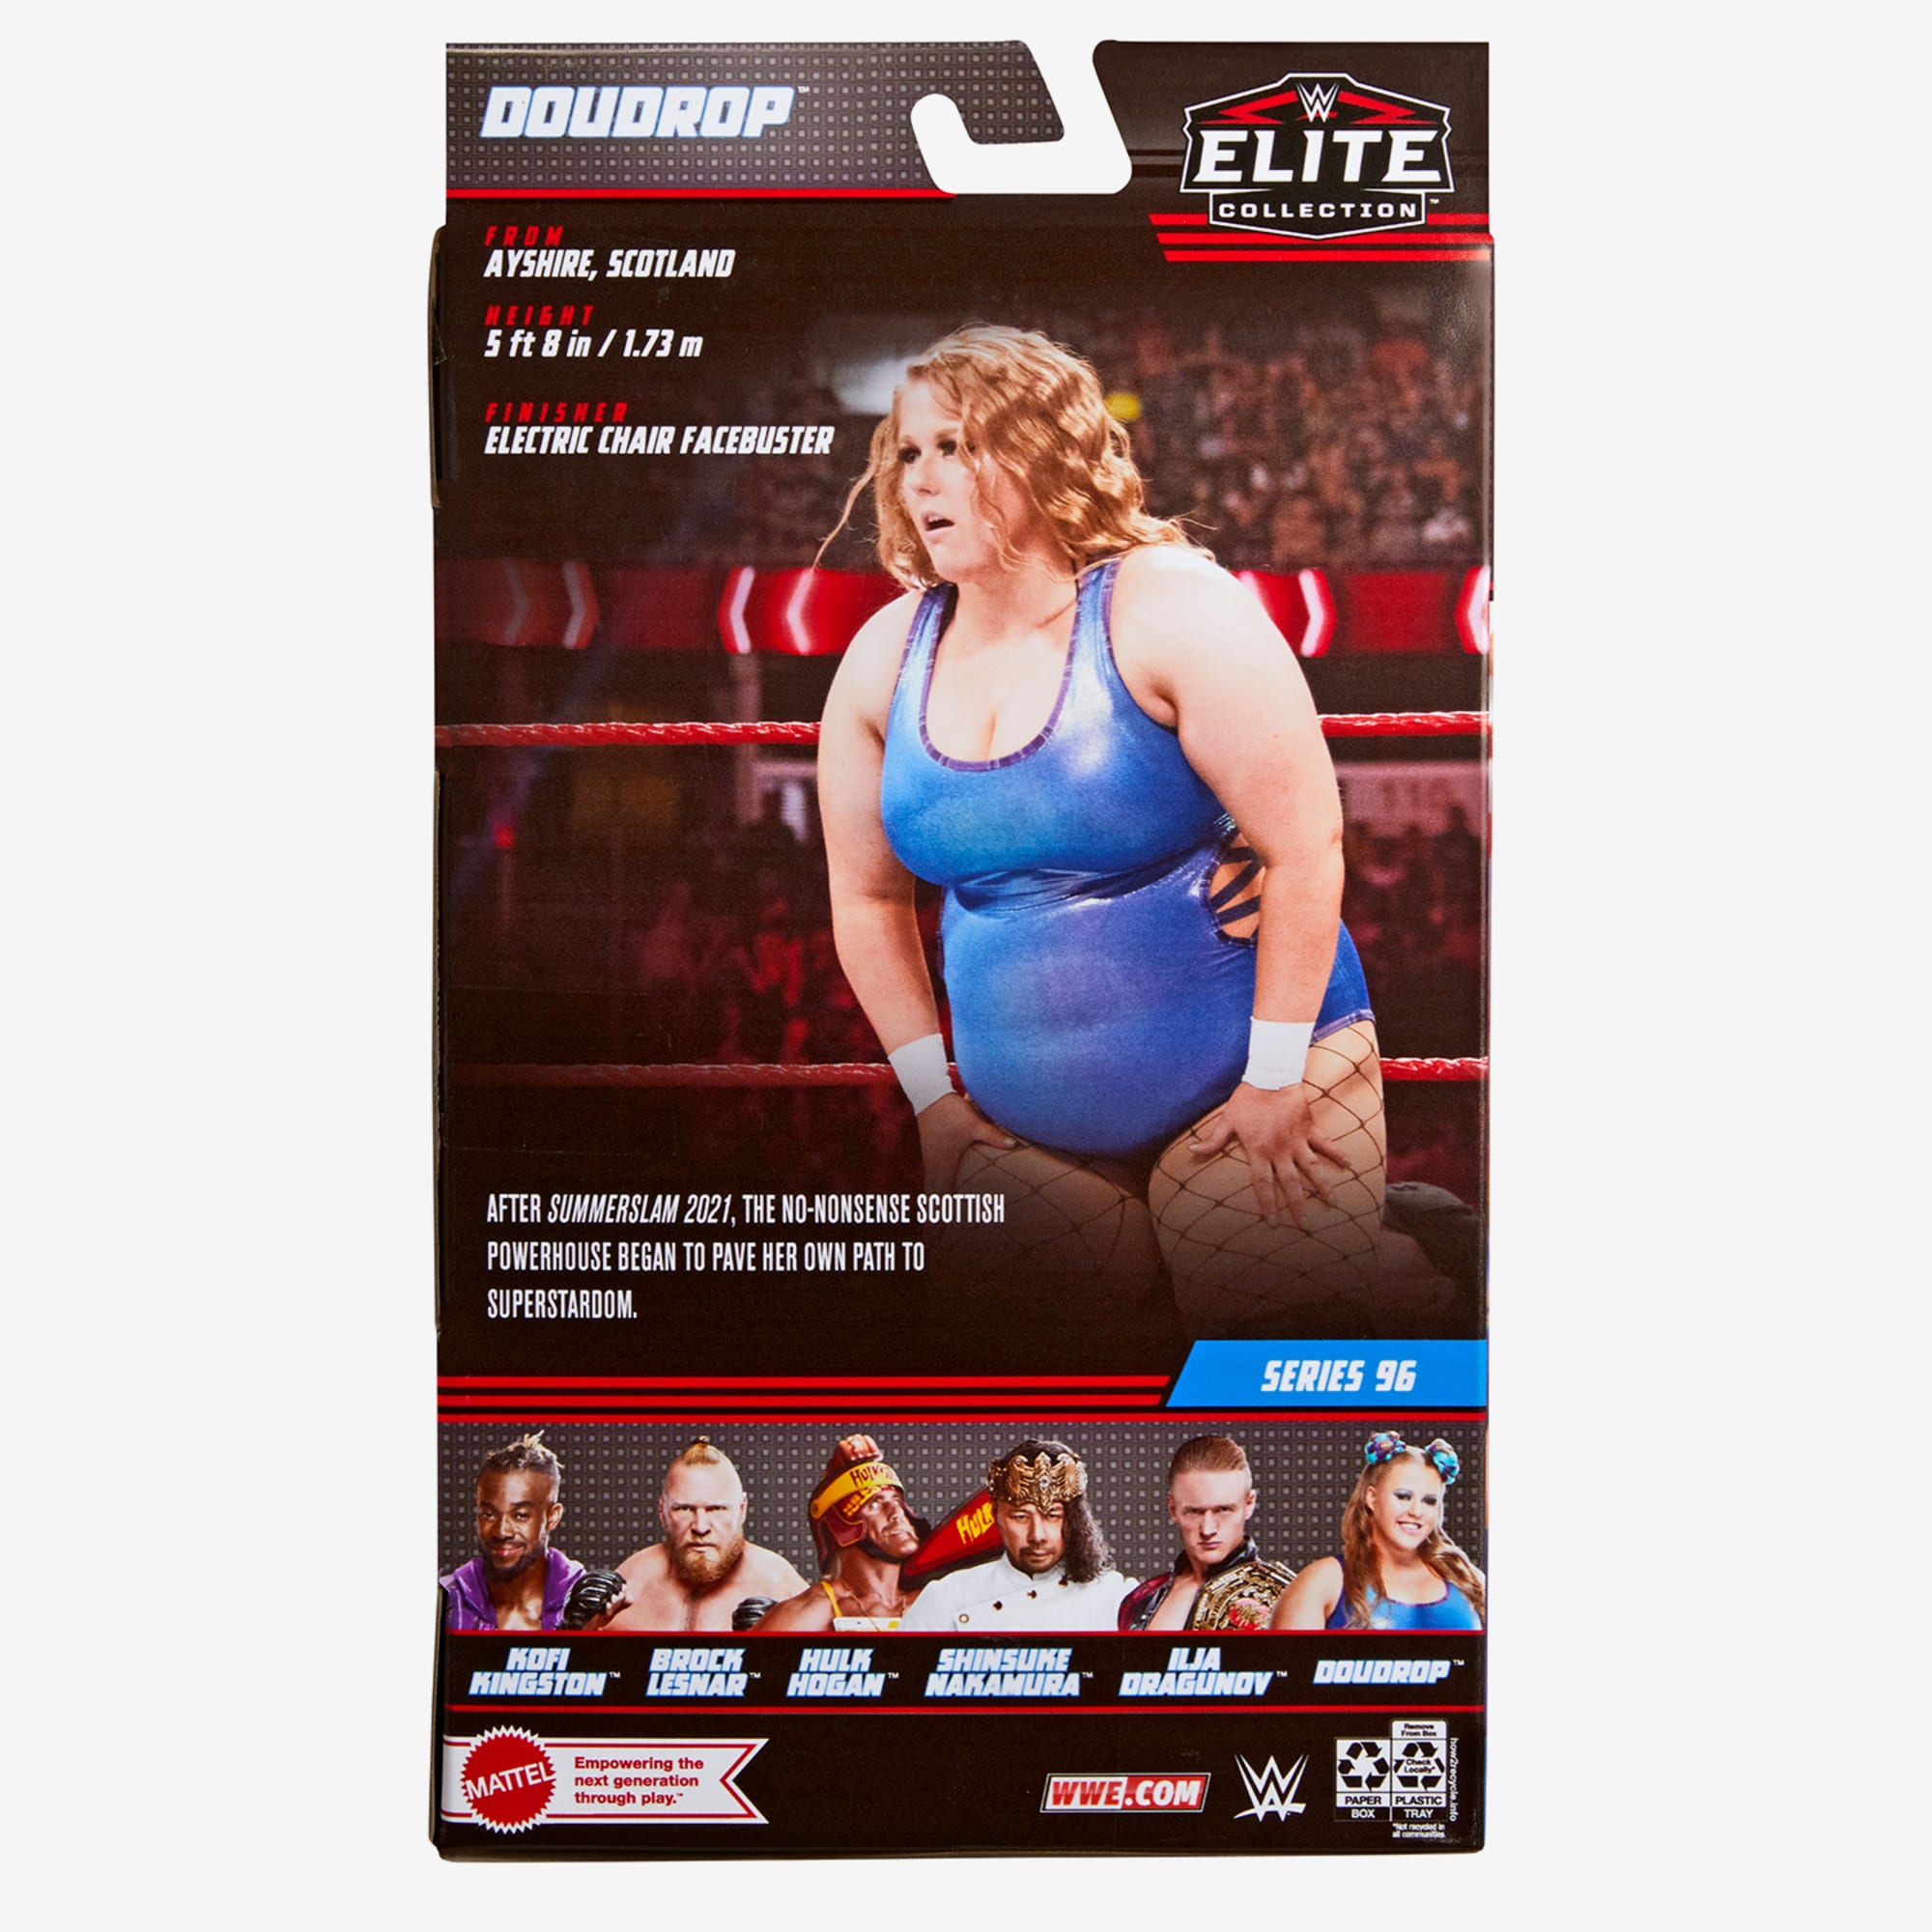 WWE® Doudrop™ Elite Collection Action Figure